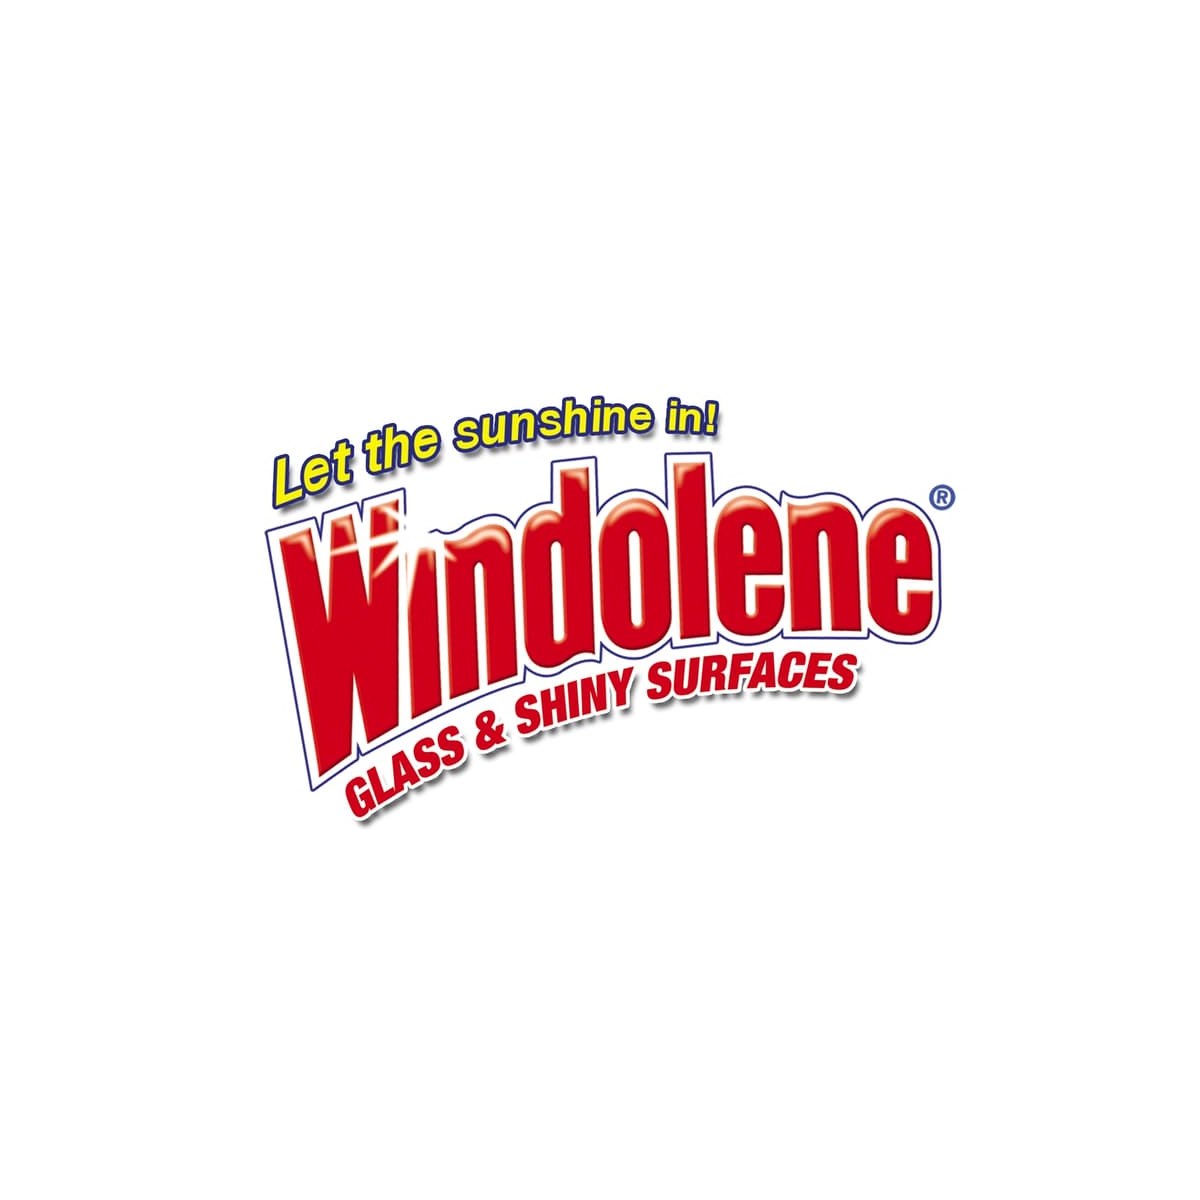 Where to buy Windolene